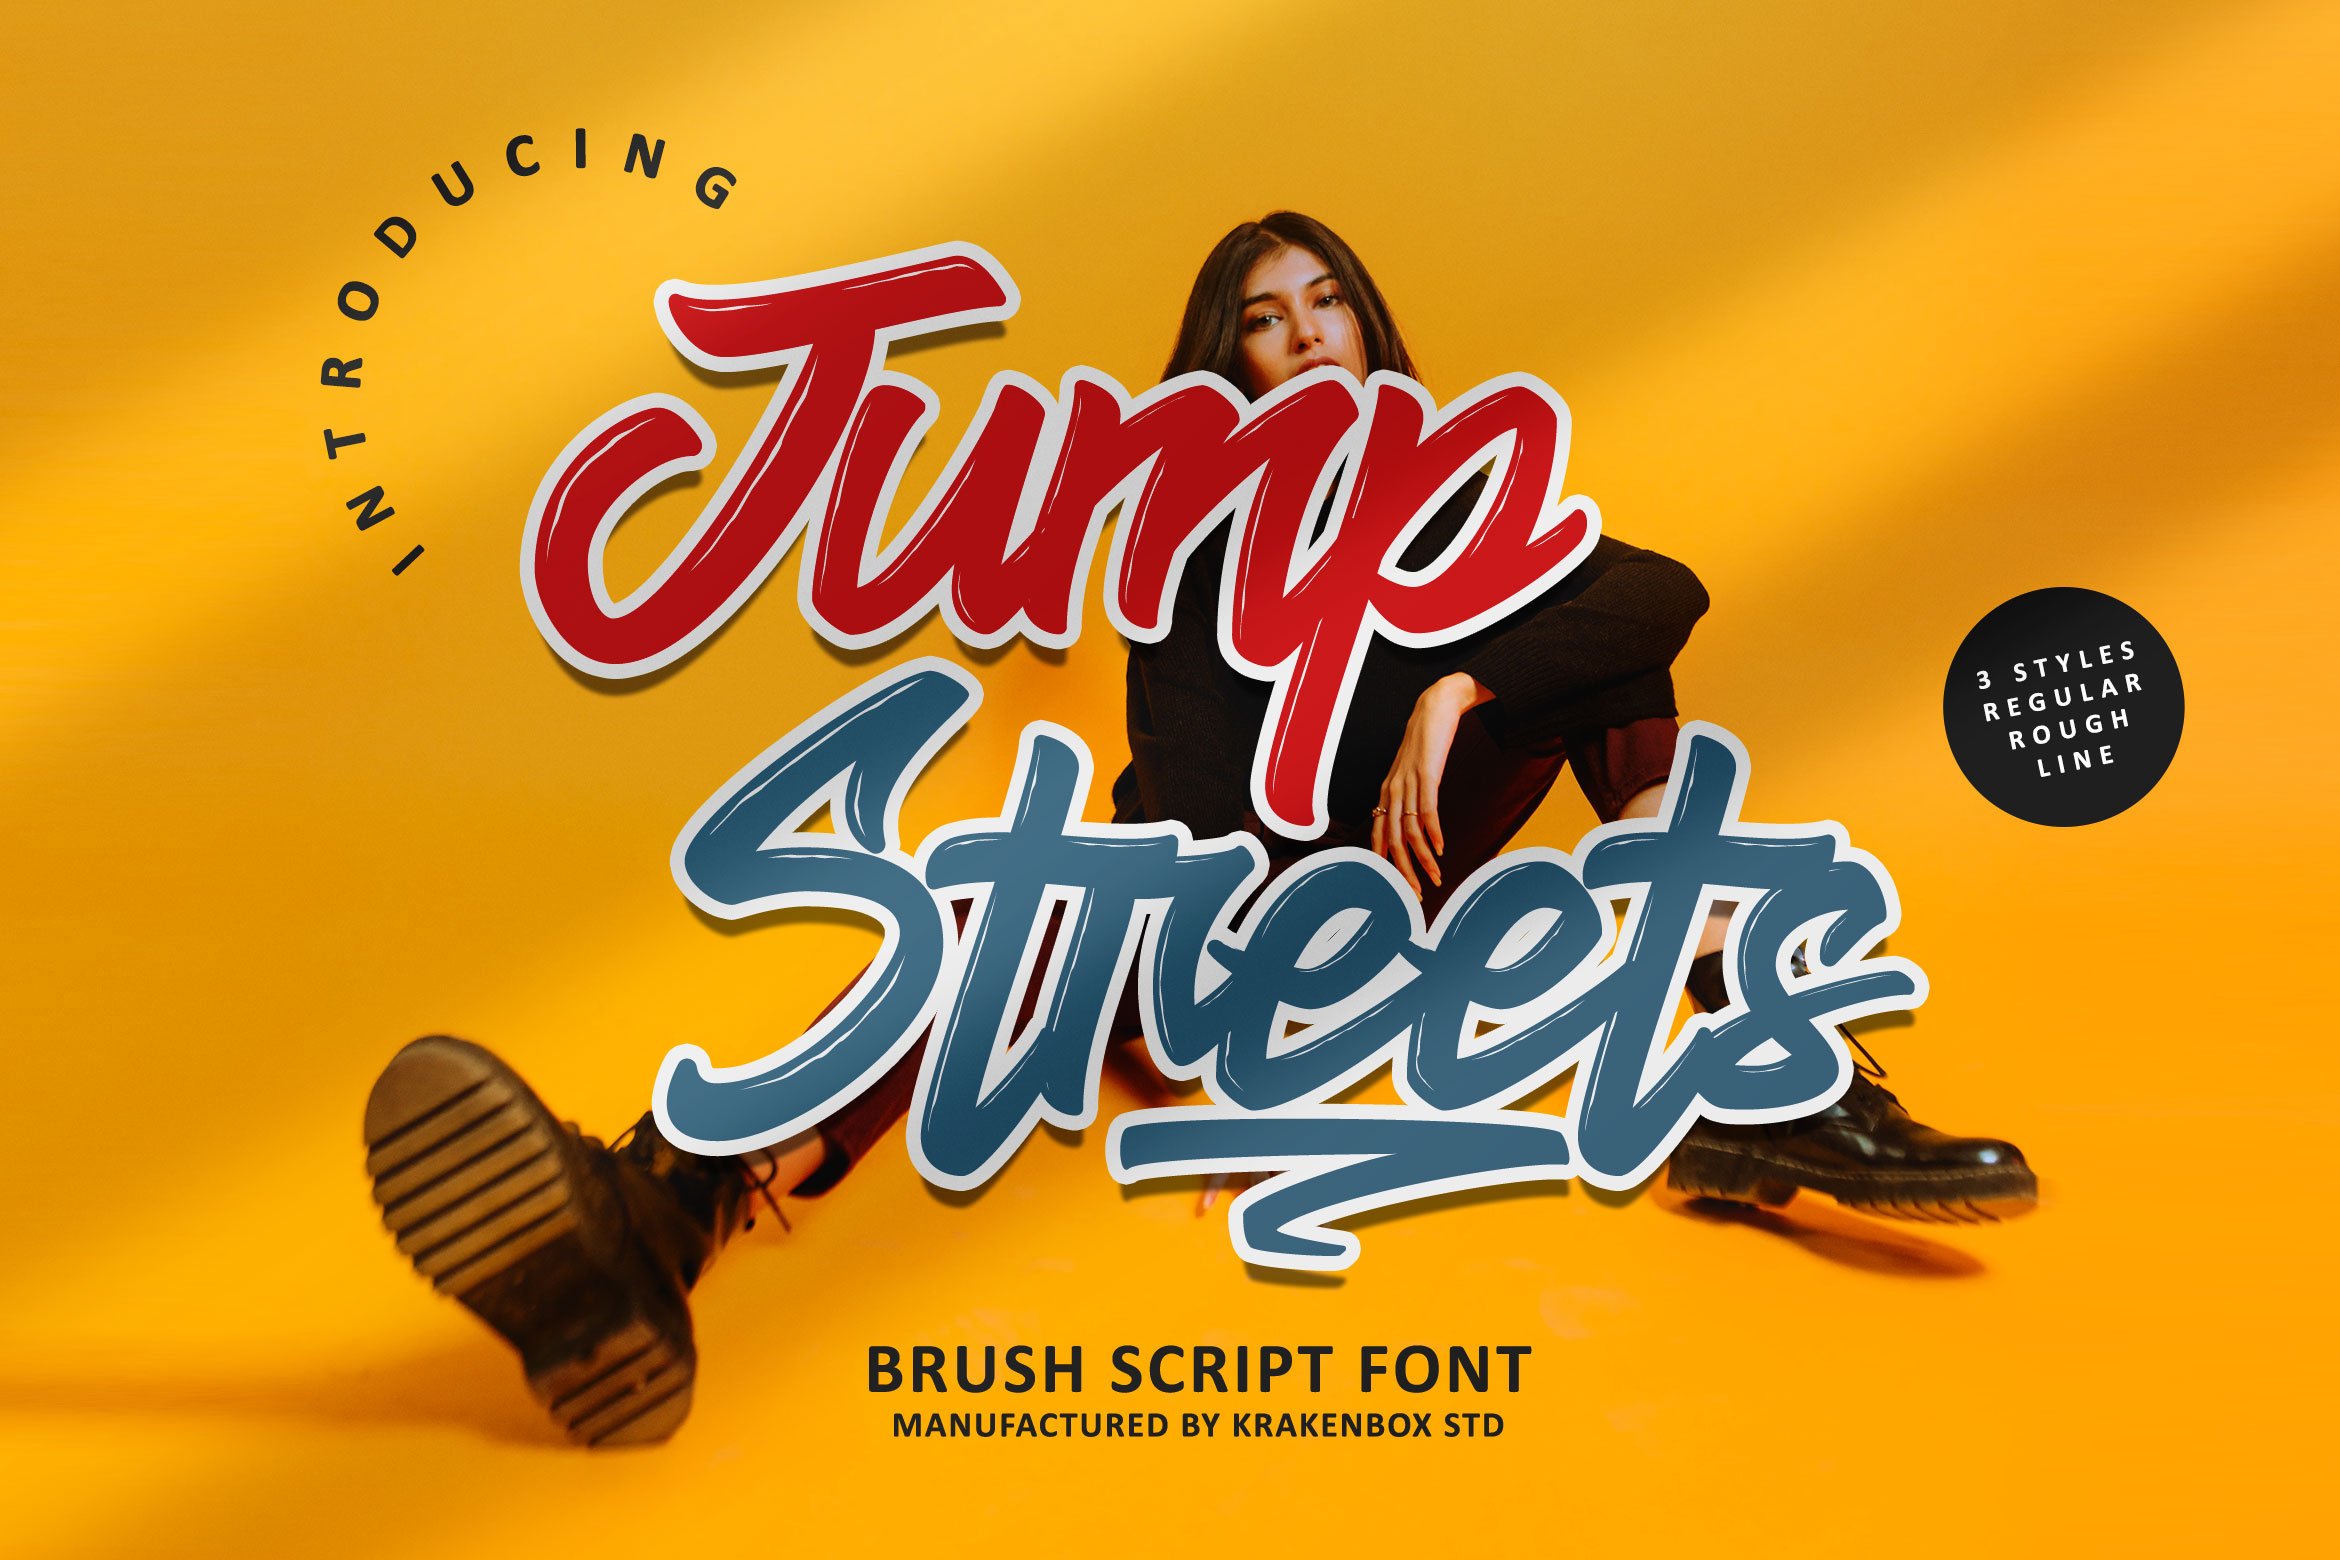 Jump Streets - Brush Script Font cover image.